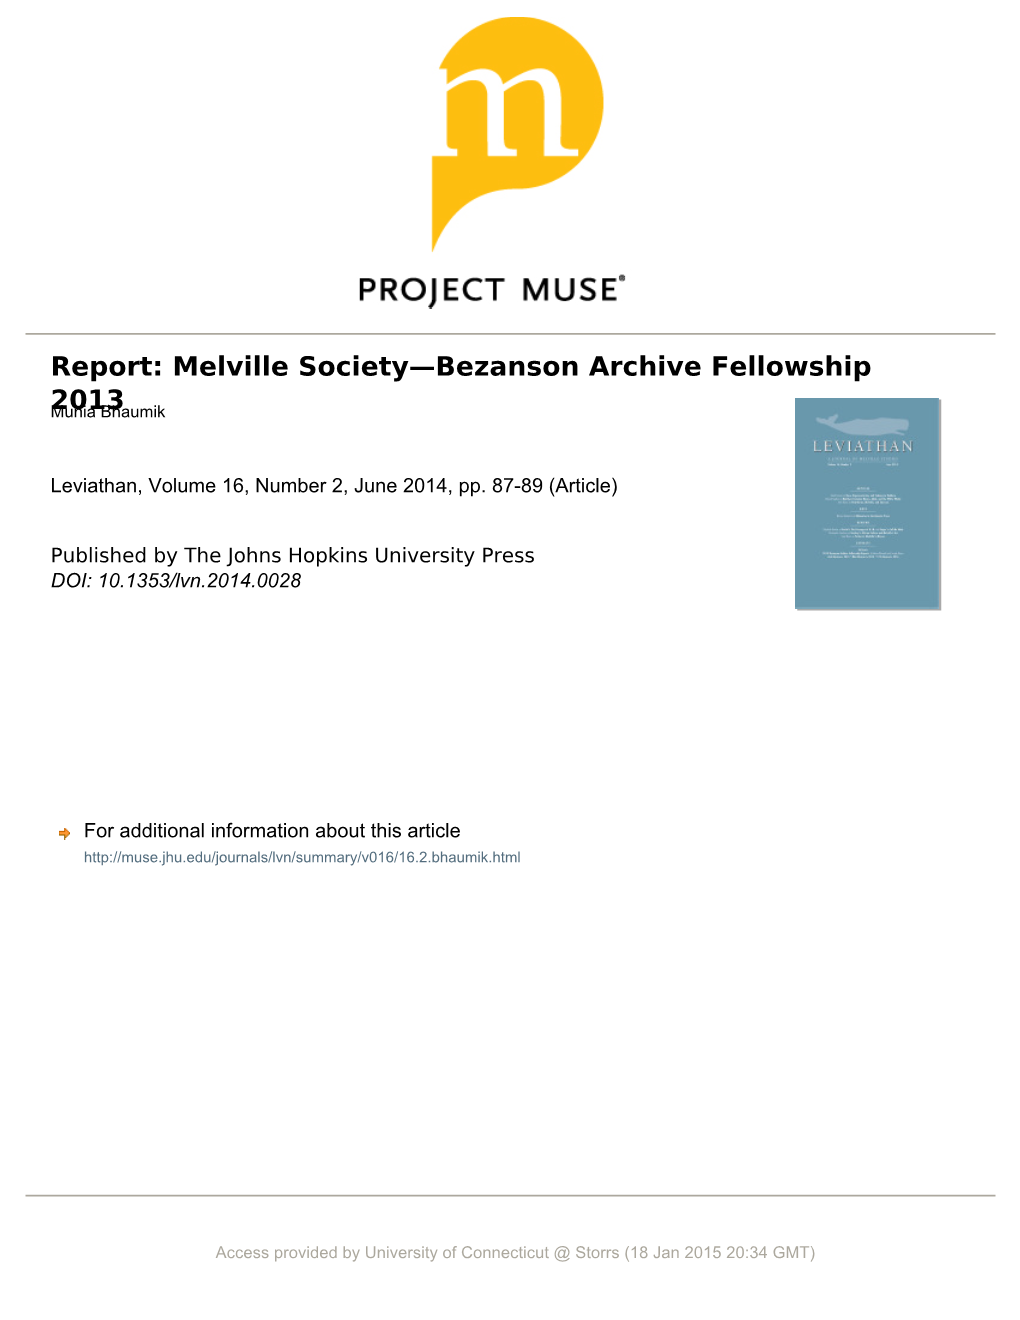 Melville Society—Bezanson Archive Fellowship 2013